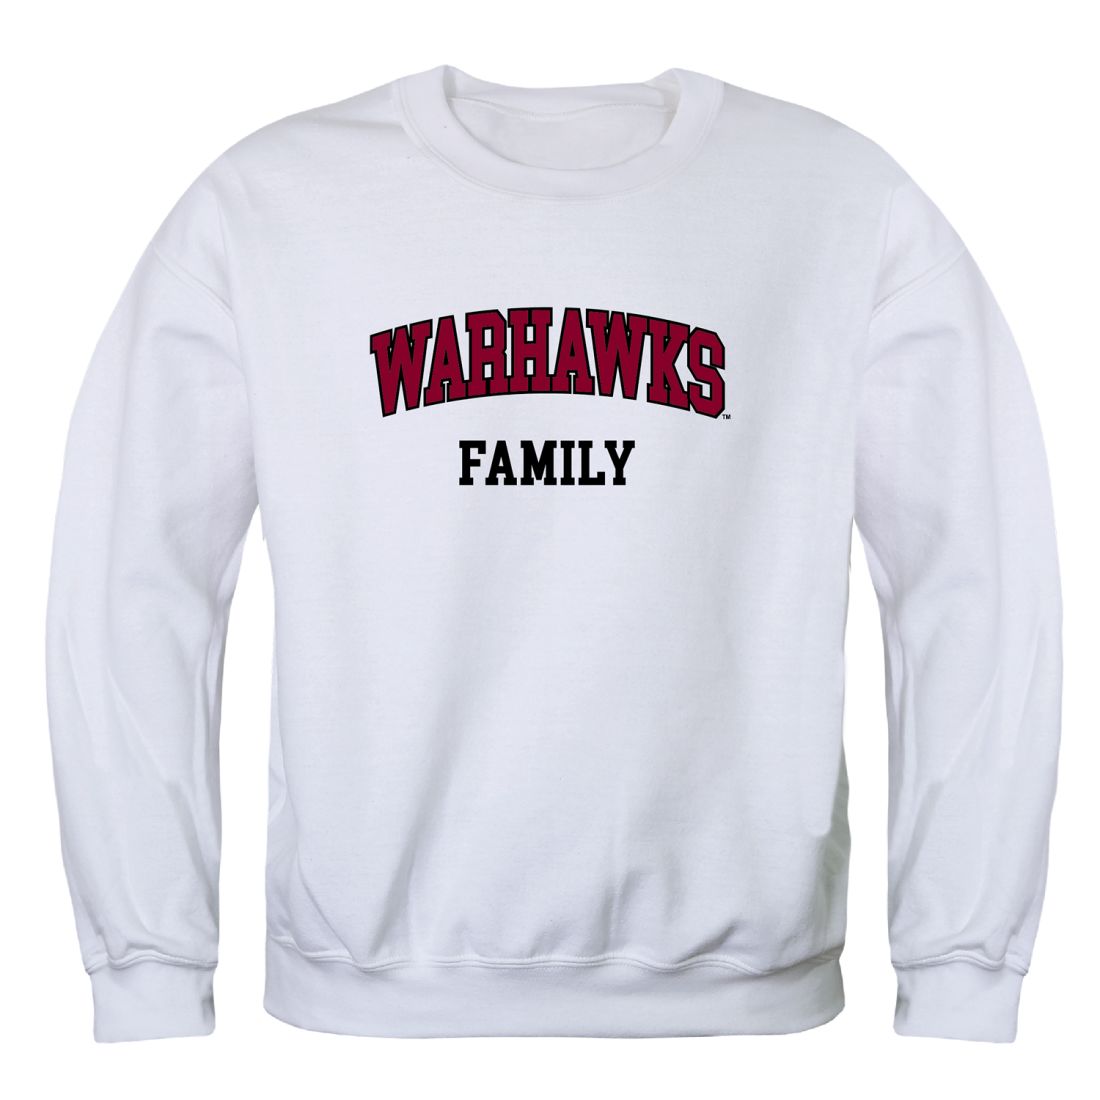 ULM-University-of-Louisiana-Monroe-Warhawks-Family-Fleece-Crewneck-Pullover-Sweatshirt